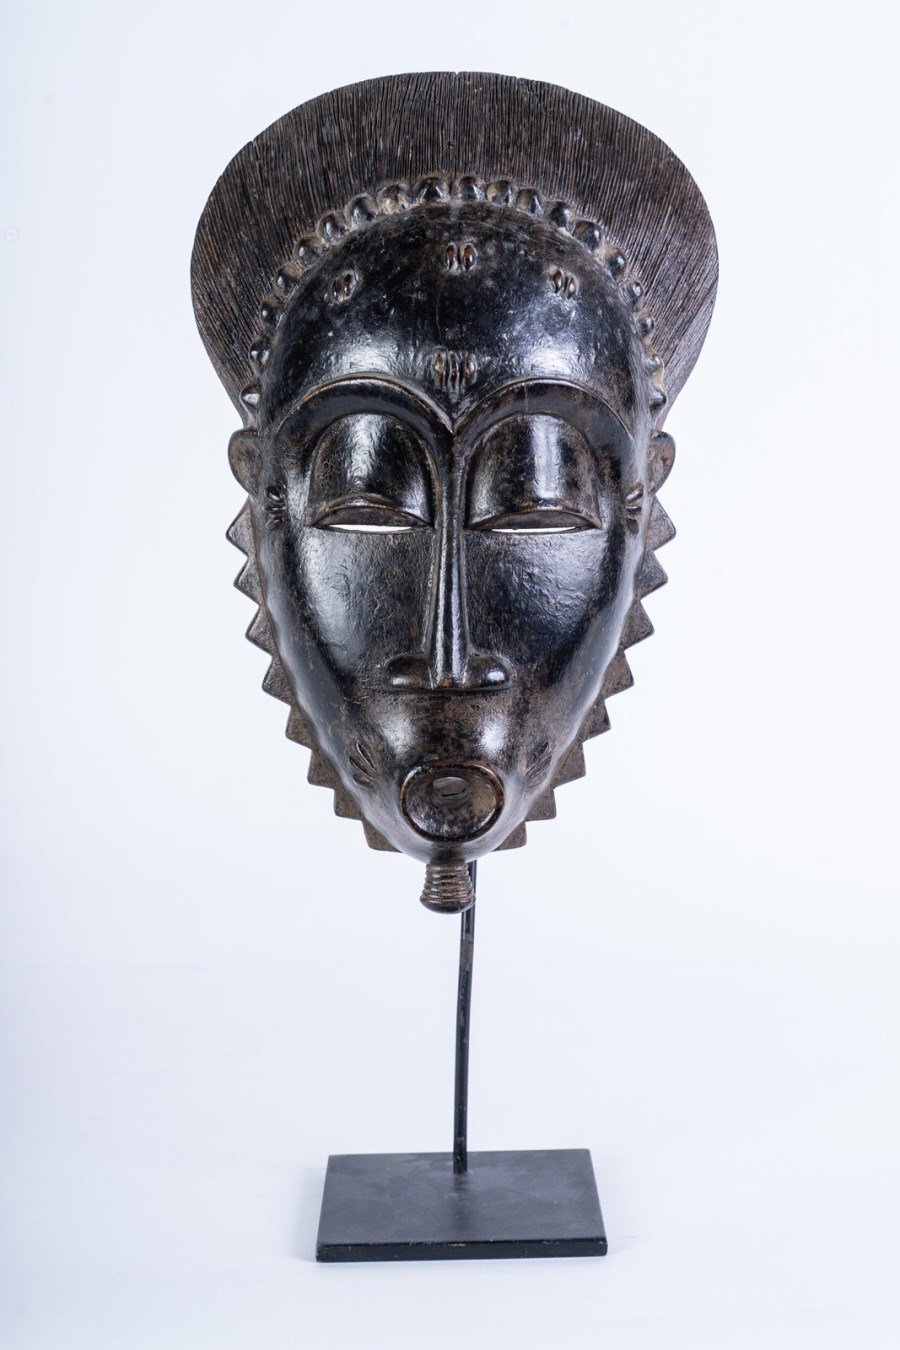 Maschera ritratto mblo, Baule
Costa d'Avorio (Arte Africana )